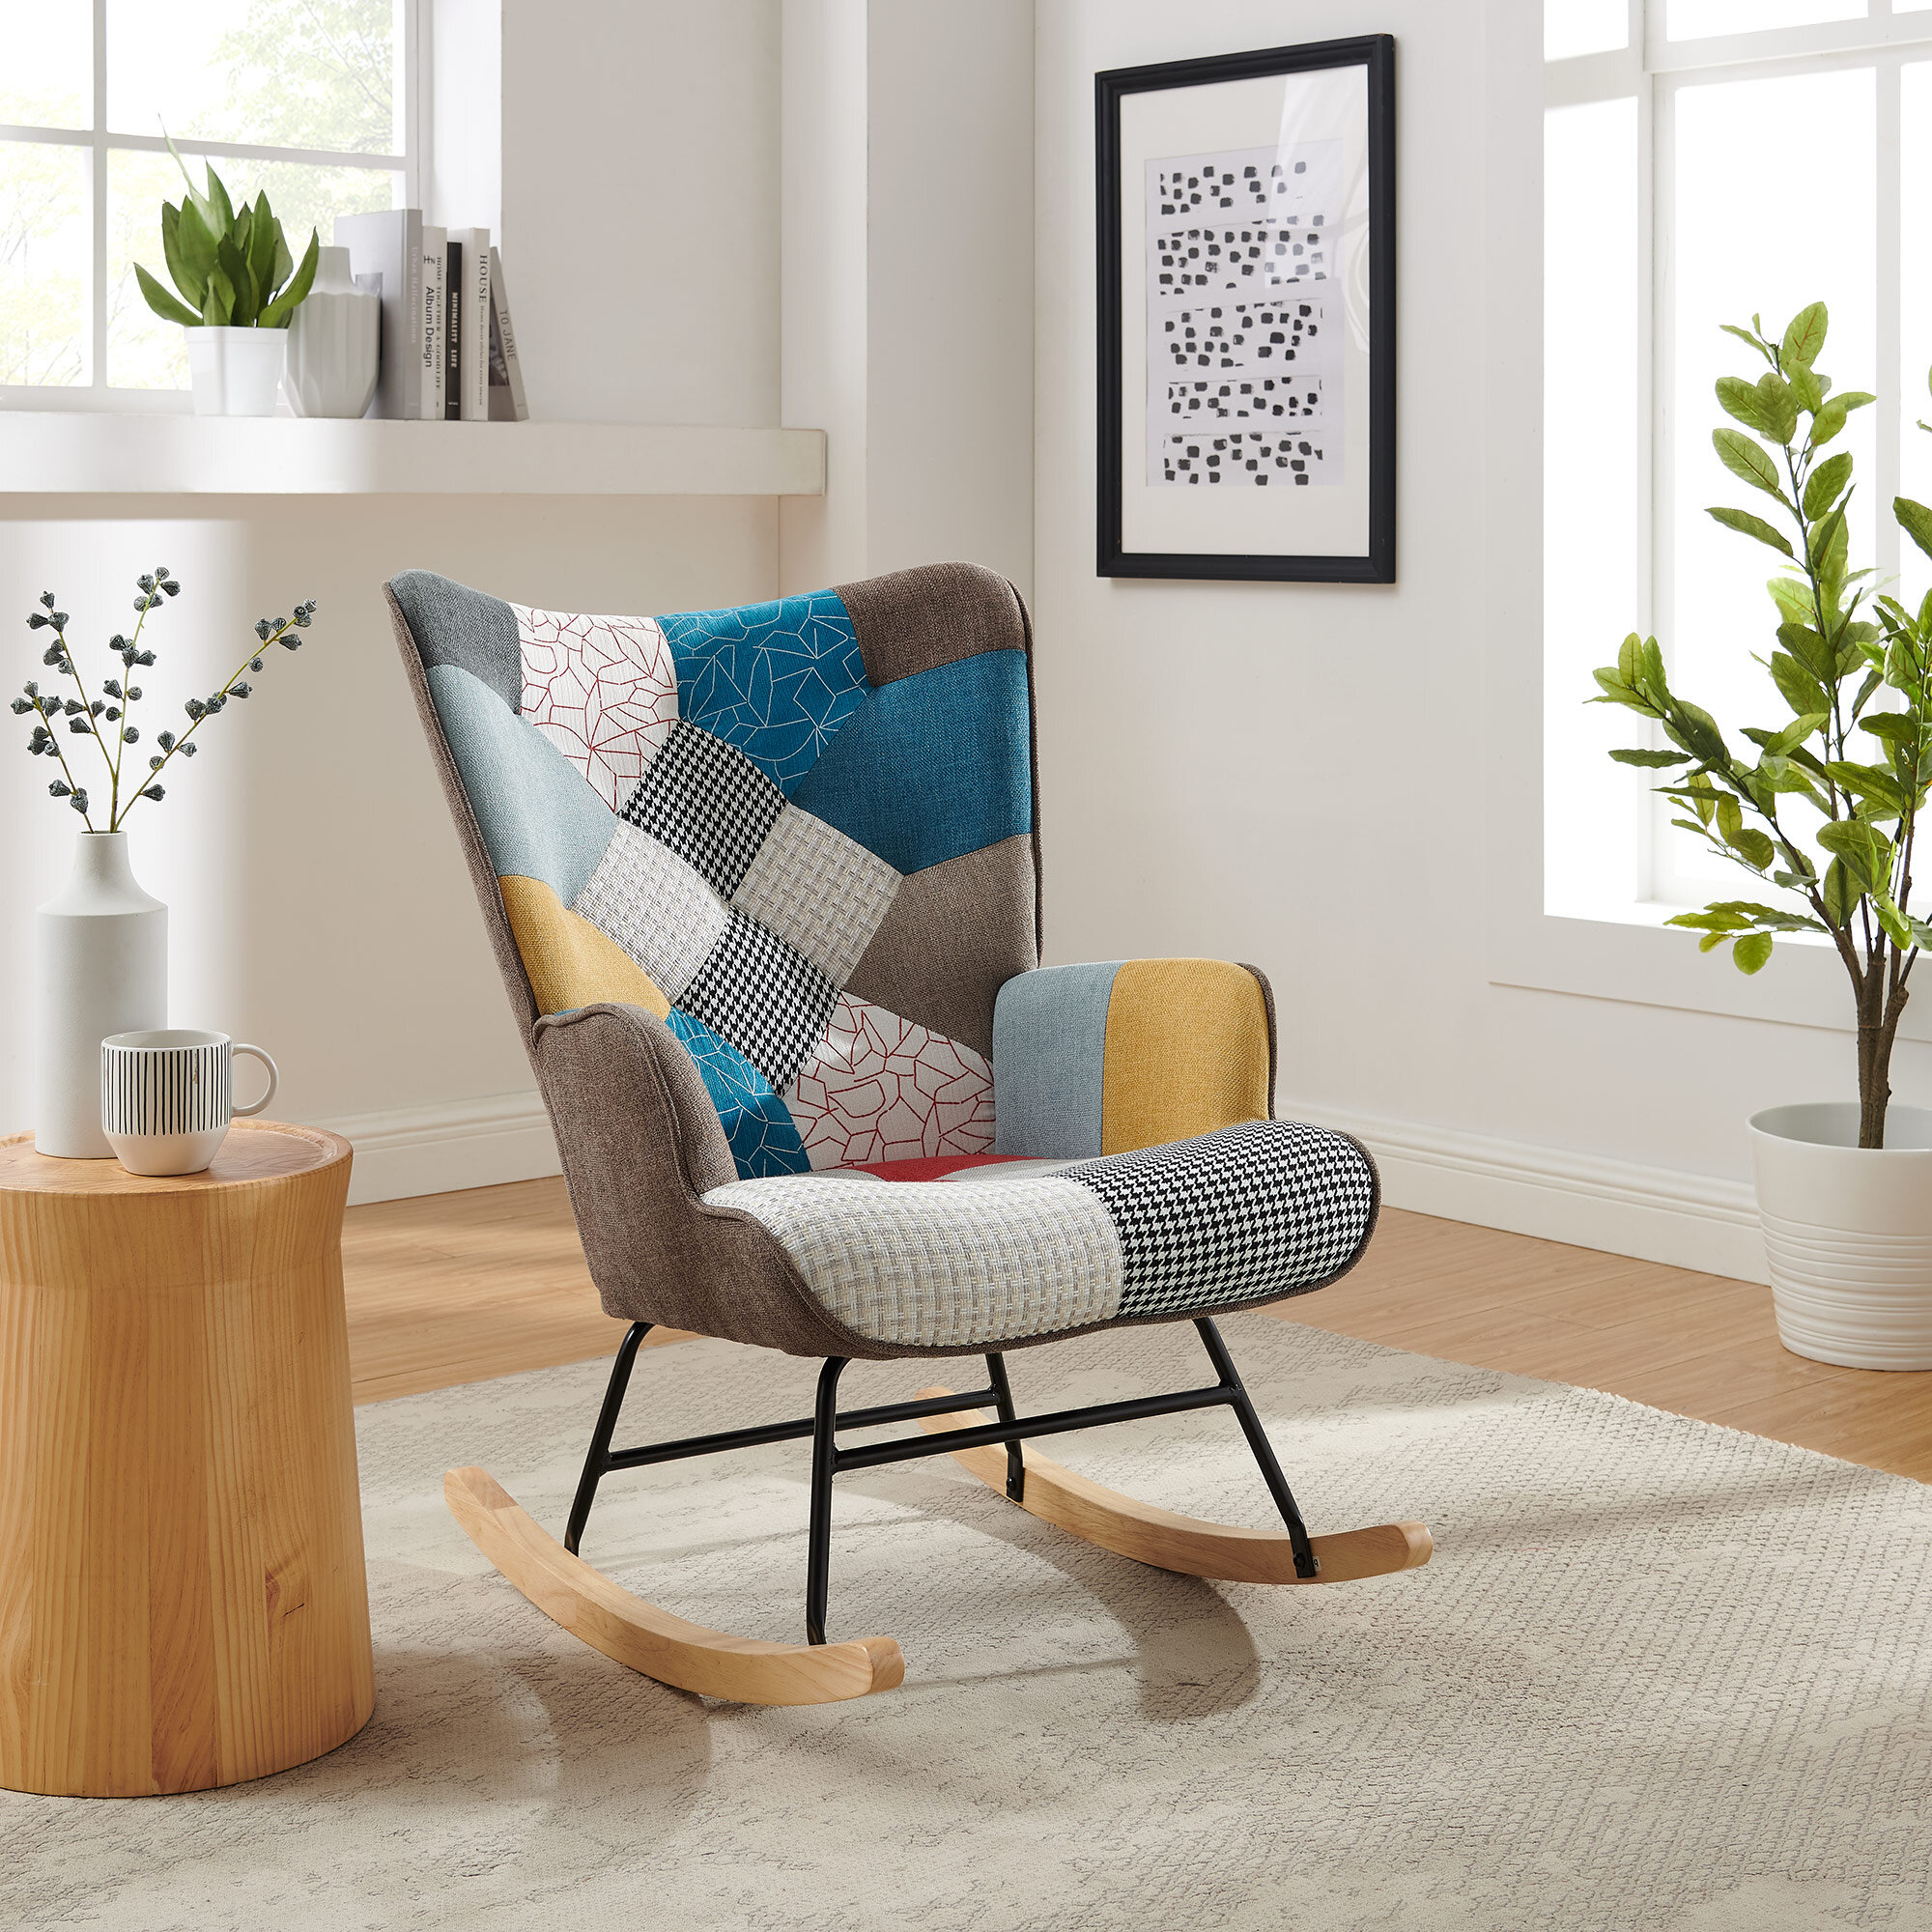 Movian Wendy Rocking Chair 71 x 57 x 81 cm Light Grey 